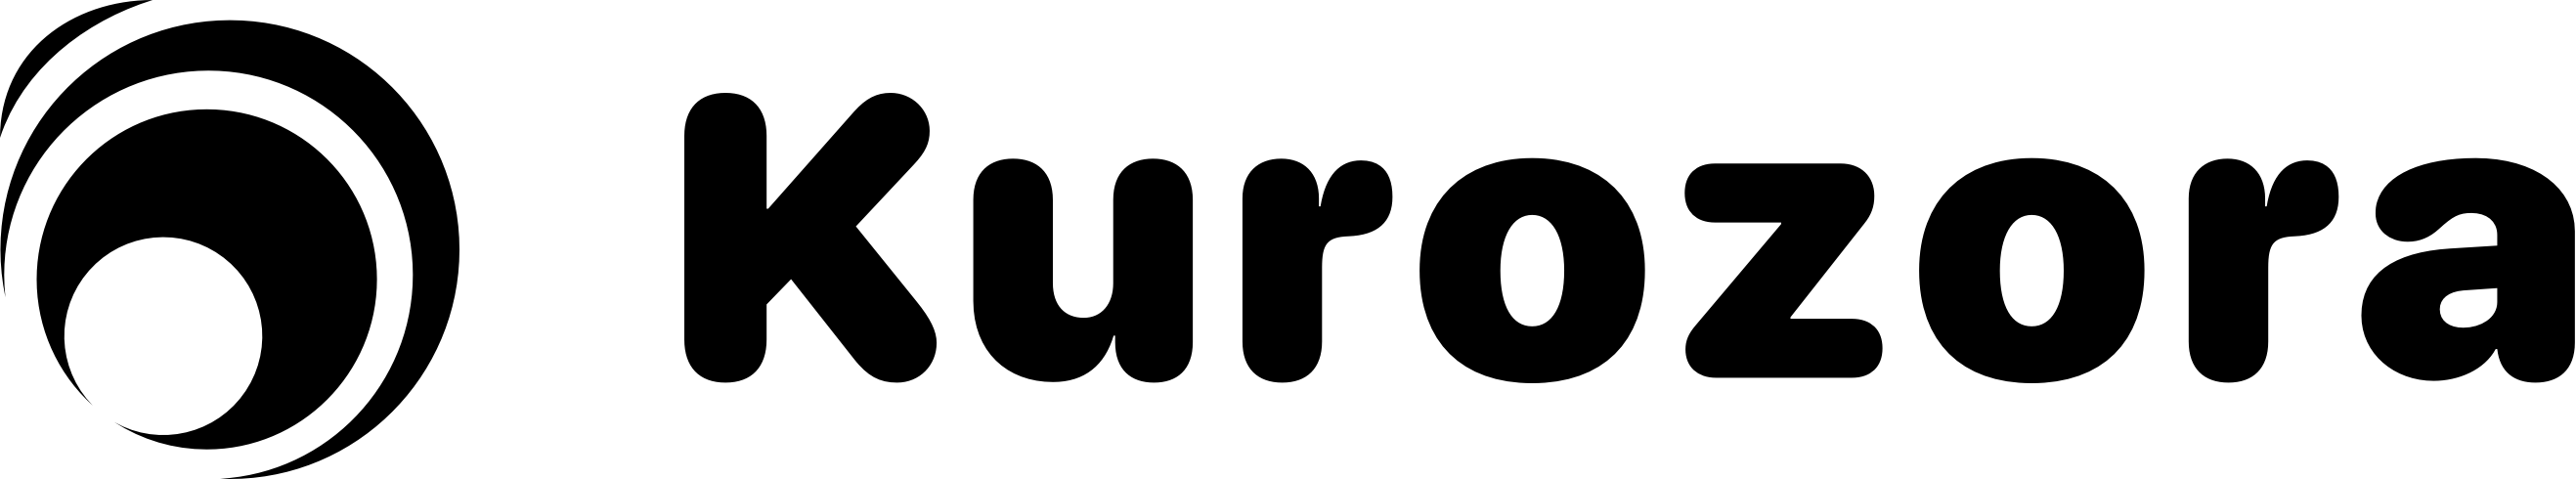 Kurozora full logo black RGB monochrome